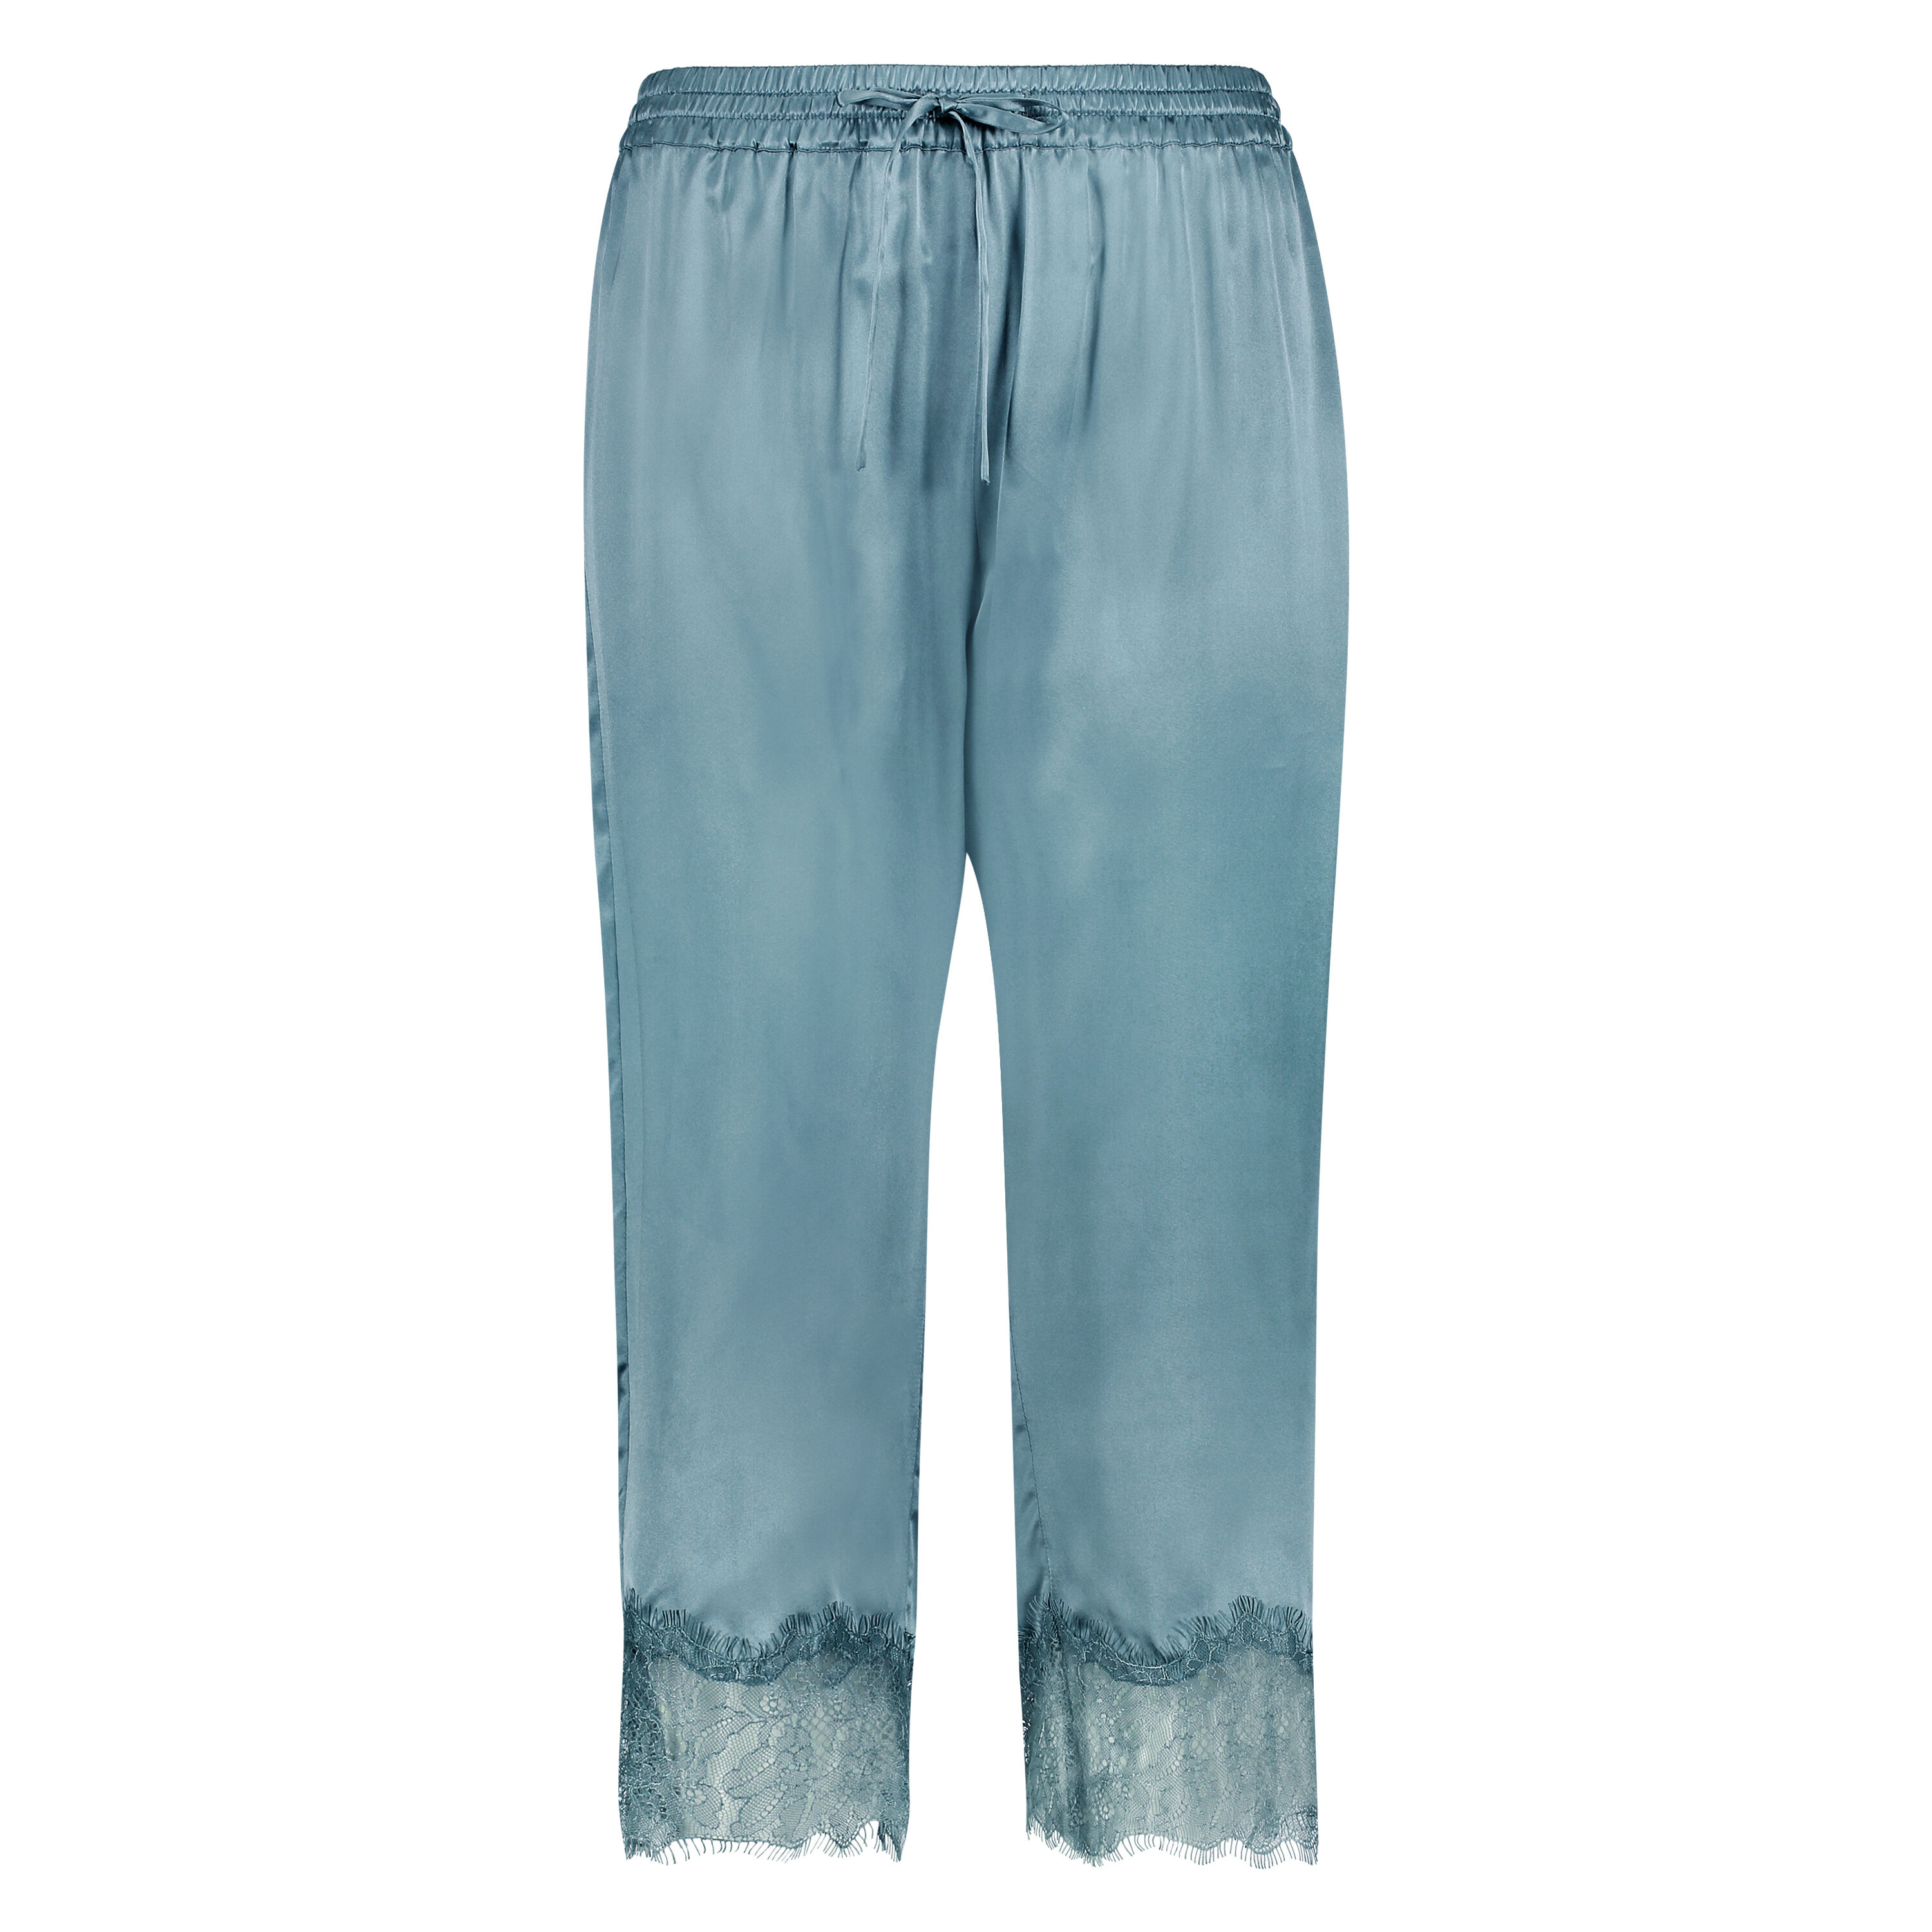 Wantschun Womens Capri Pajama Pants Satin Silk Causal Lounge Bottoms Sleep Pants Nightwear Loose Fit Elastic Waist 